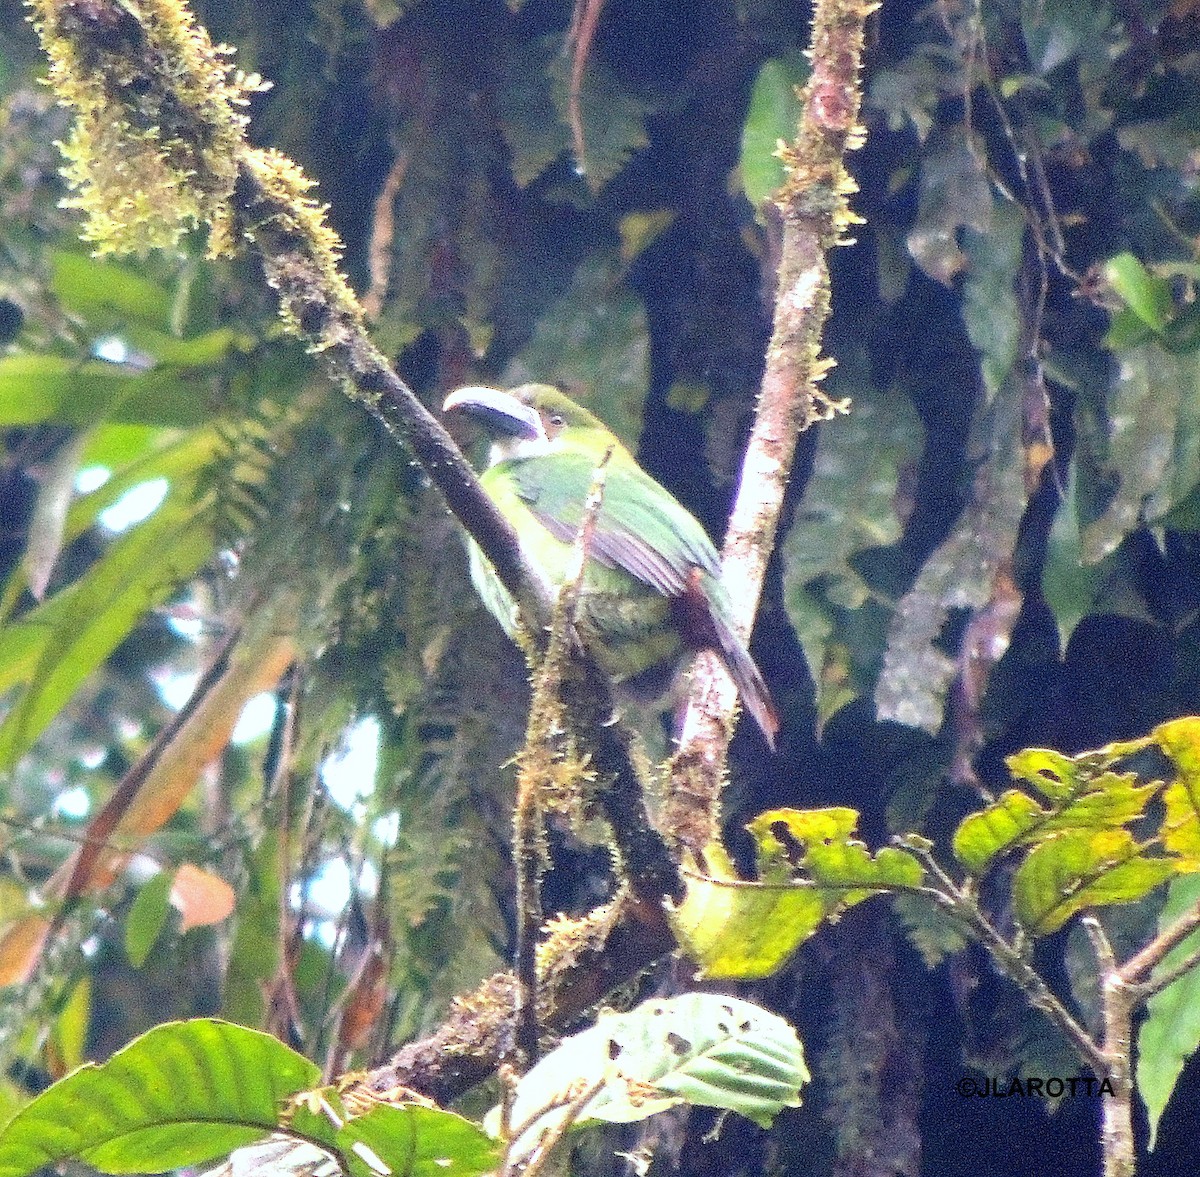 Southern Emerald-Toucanet (Andean) - Jorge La Rotta